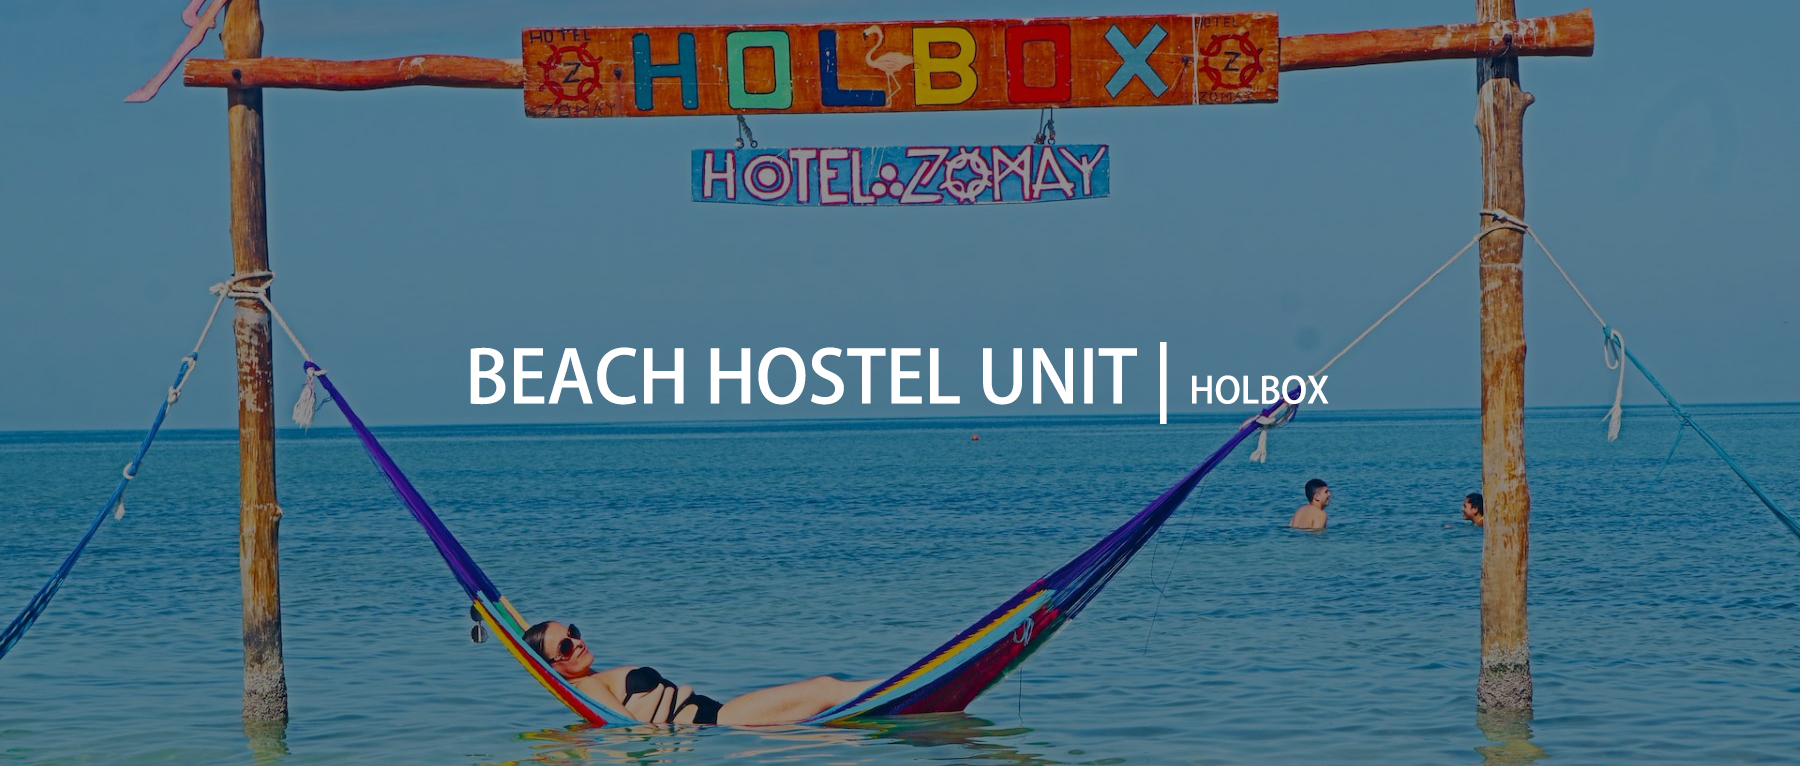 HOLBOX 海滩住宿单元设计竞赛